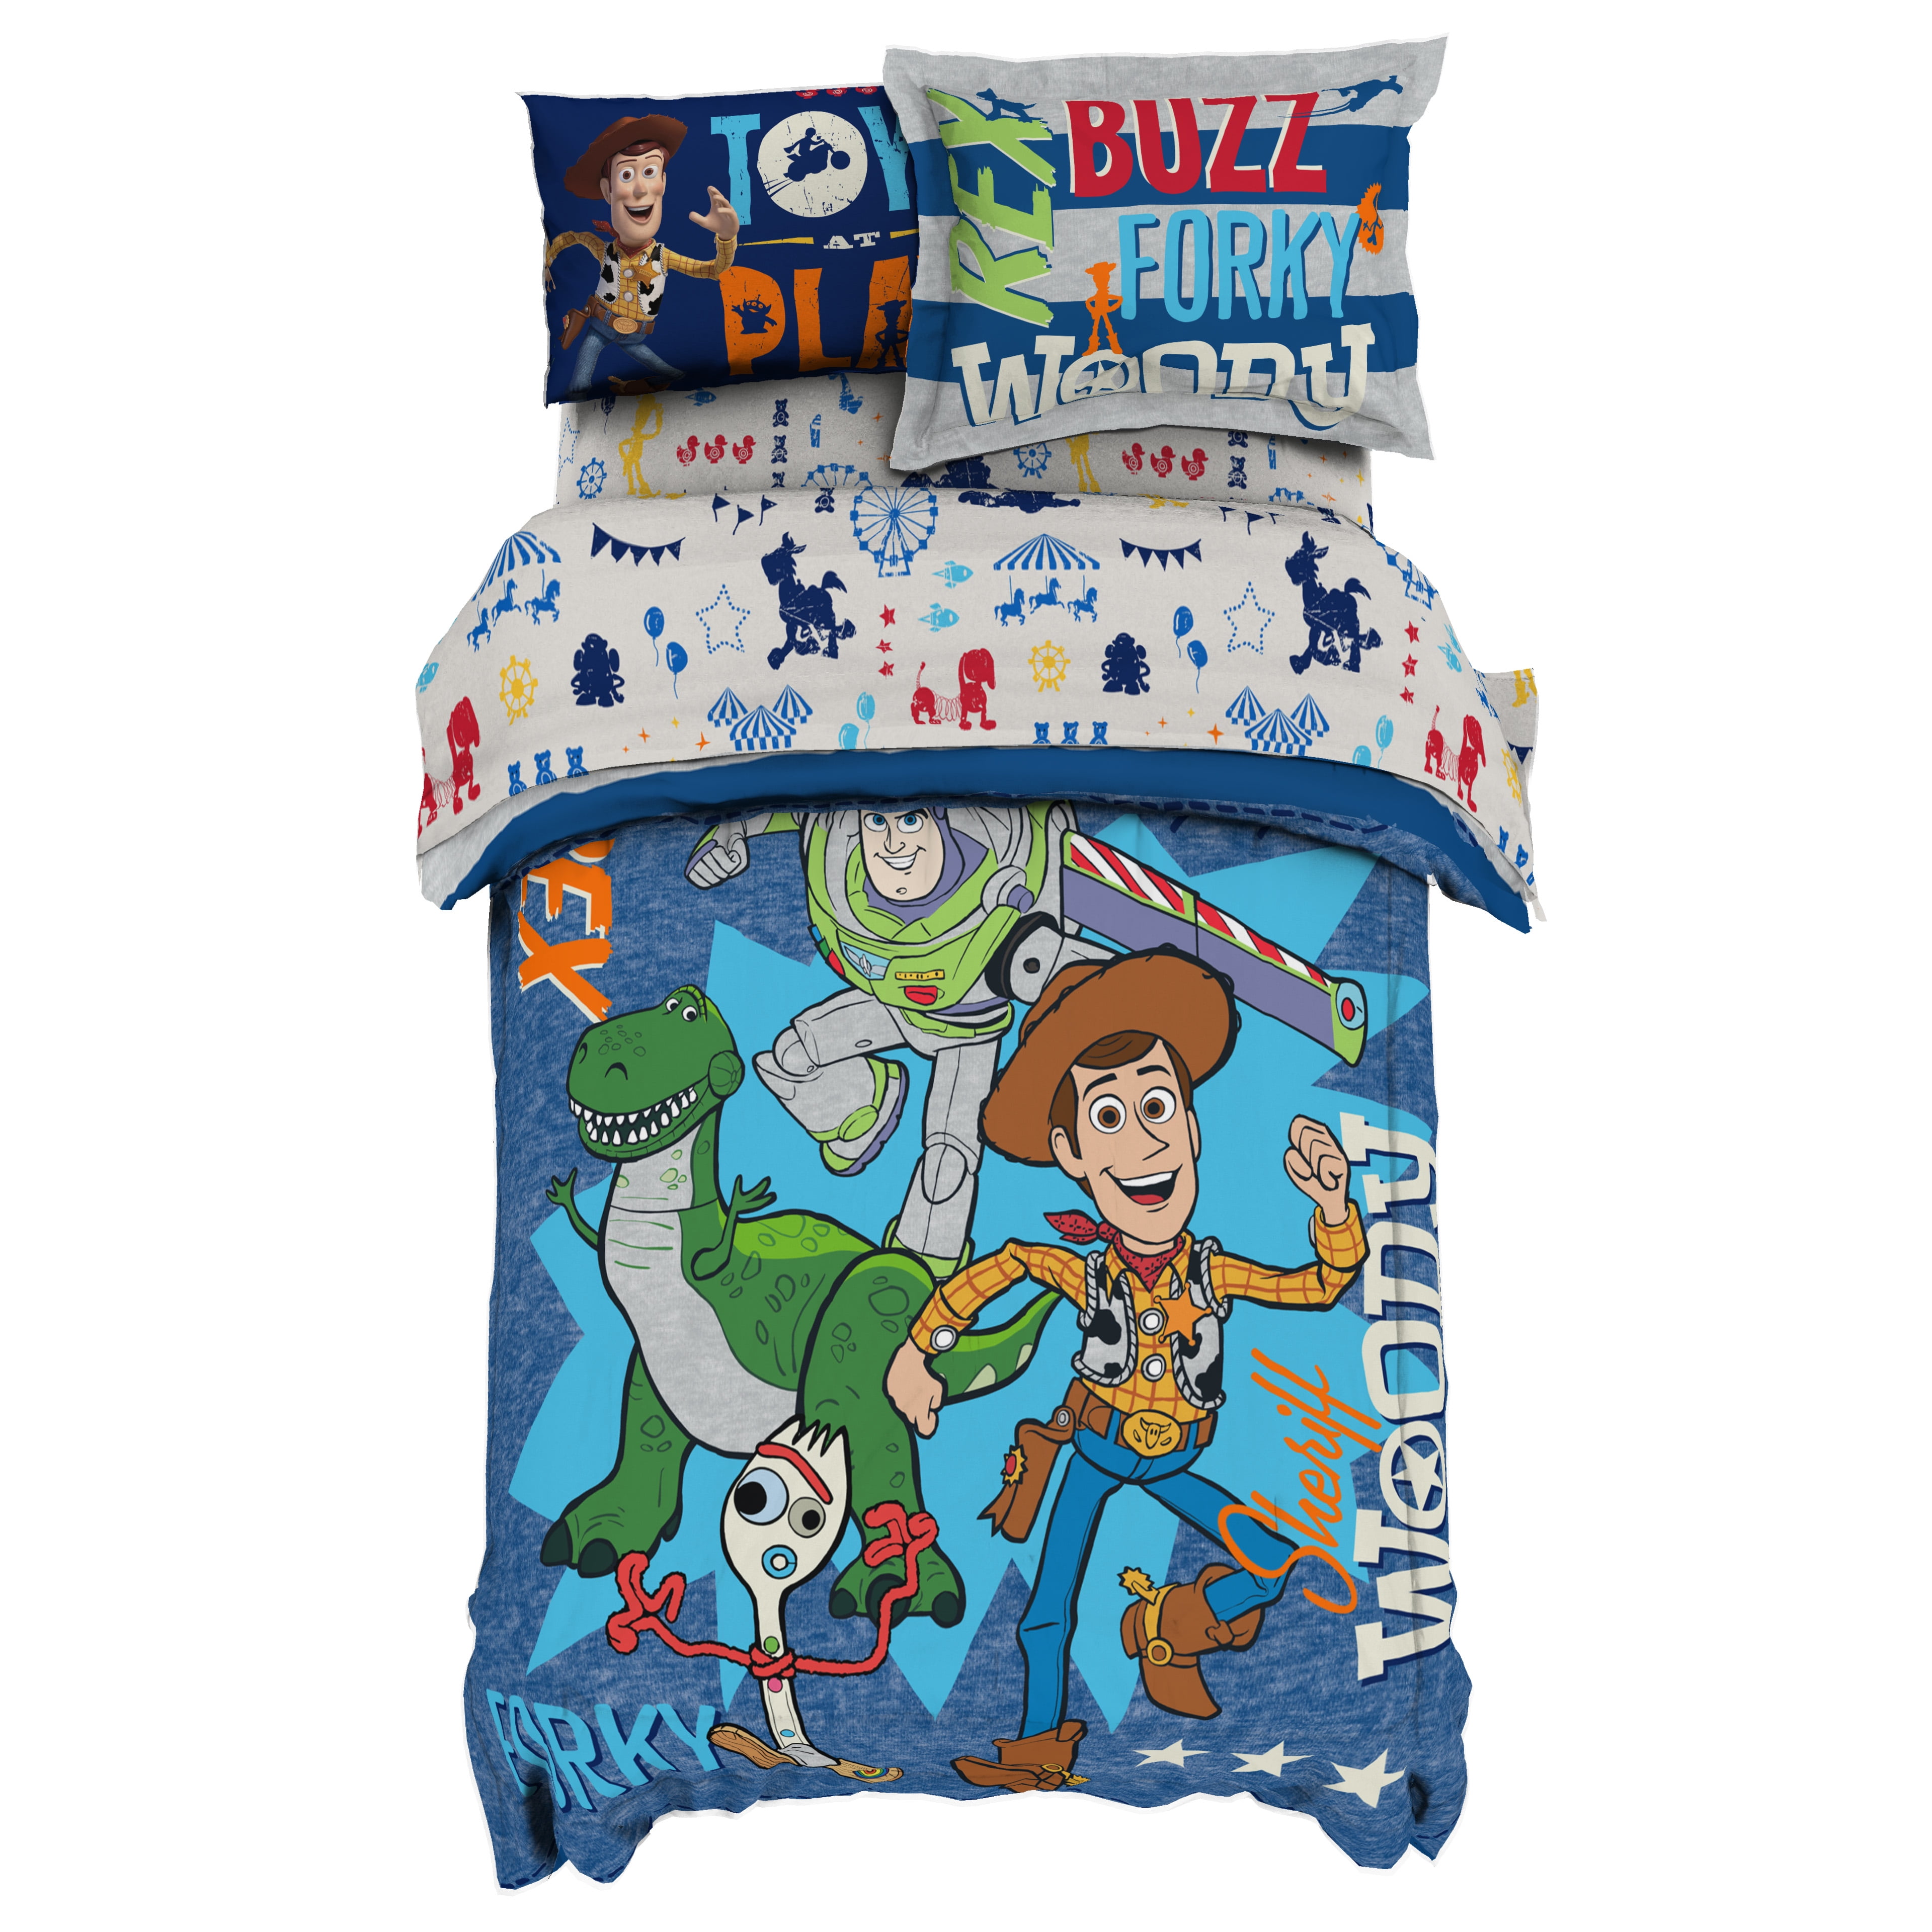 Toy Story 4 Disney Pixar Jumping Beans Reversible Comforter Full Queen Twin NEW 